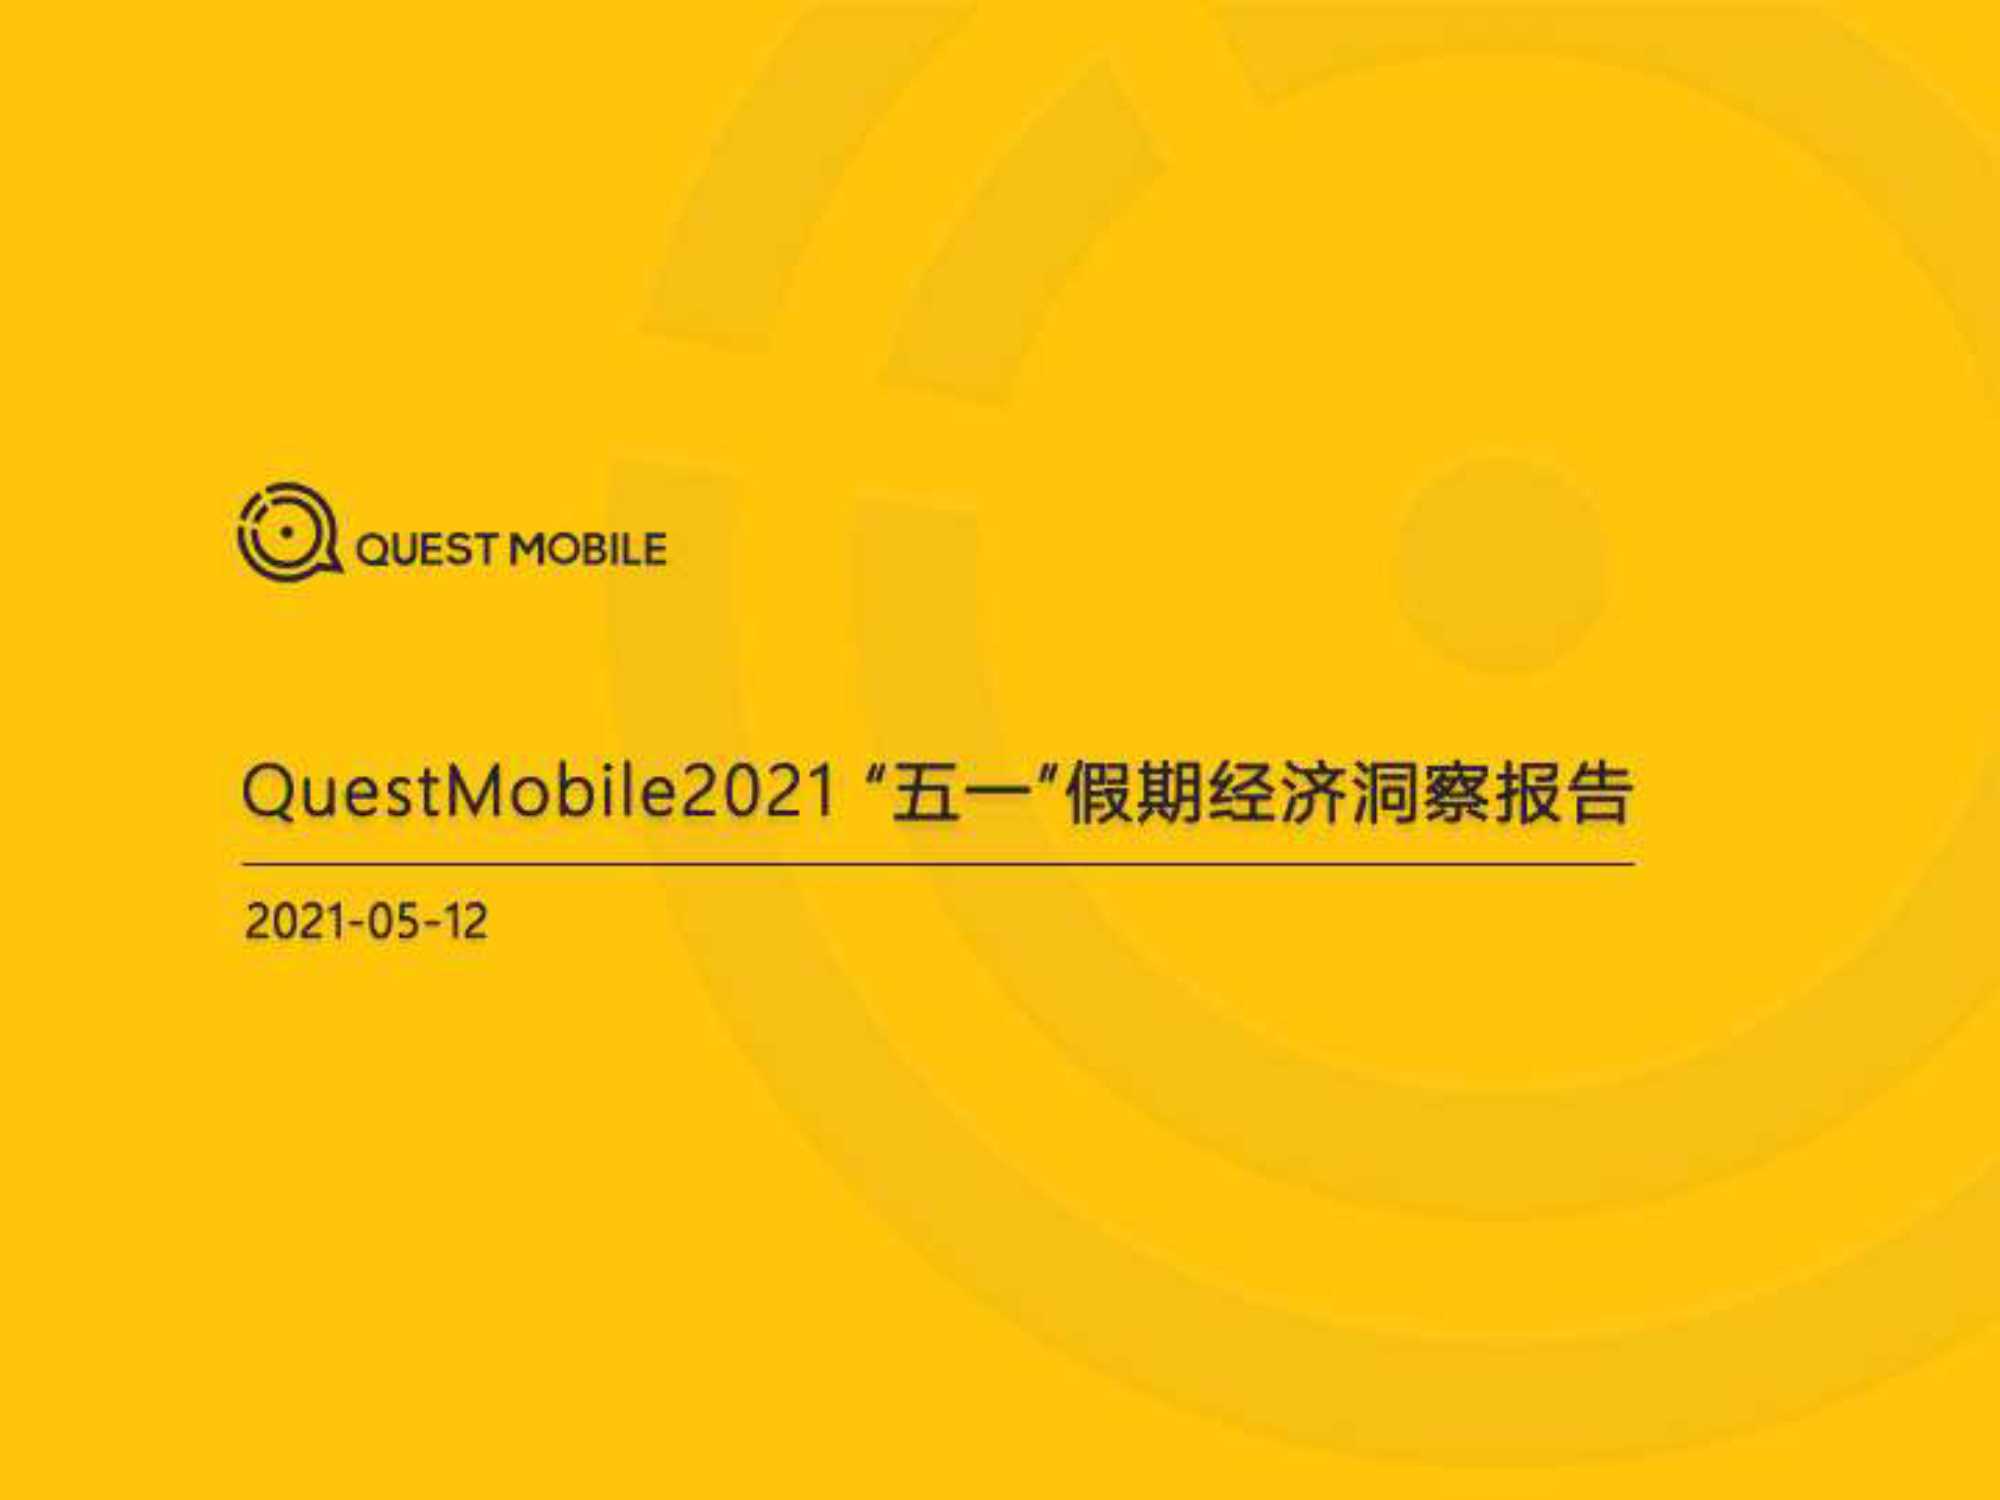 QuestMobile-2021“五一”假期经济洞察报告-2021.05-37页